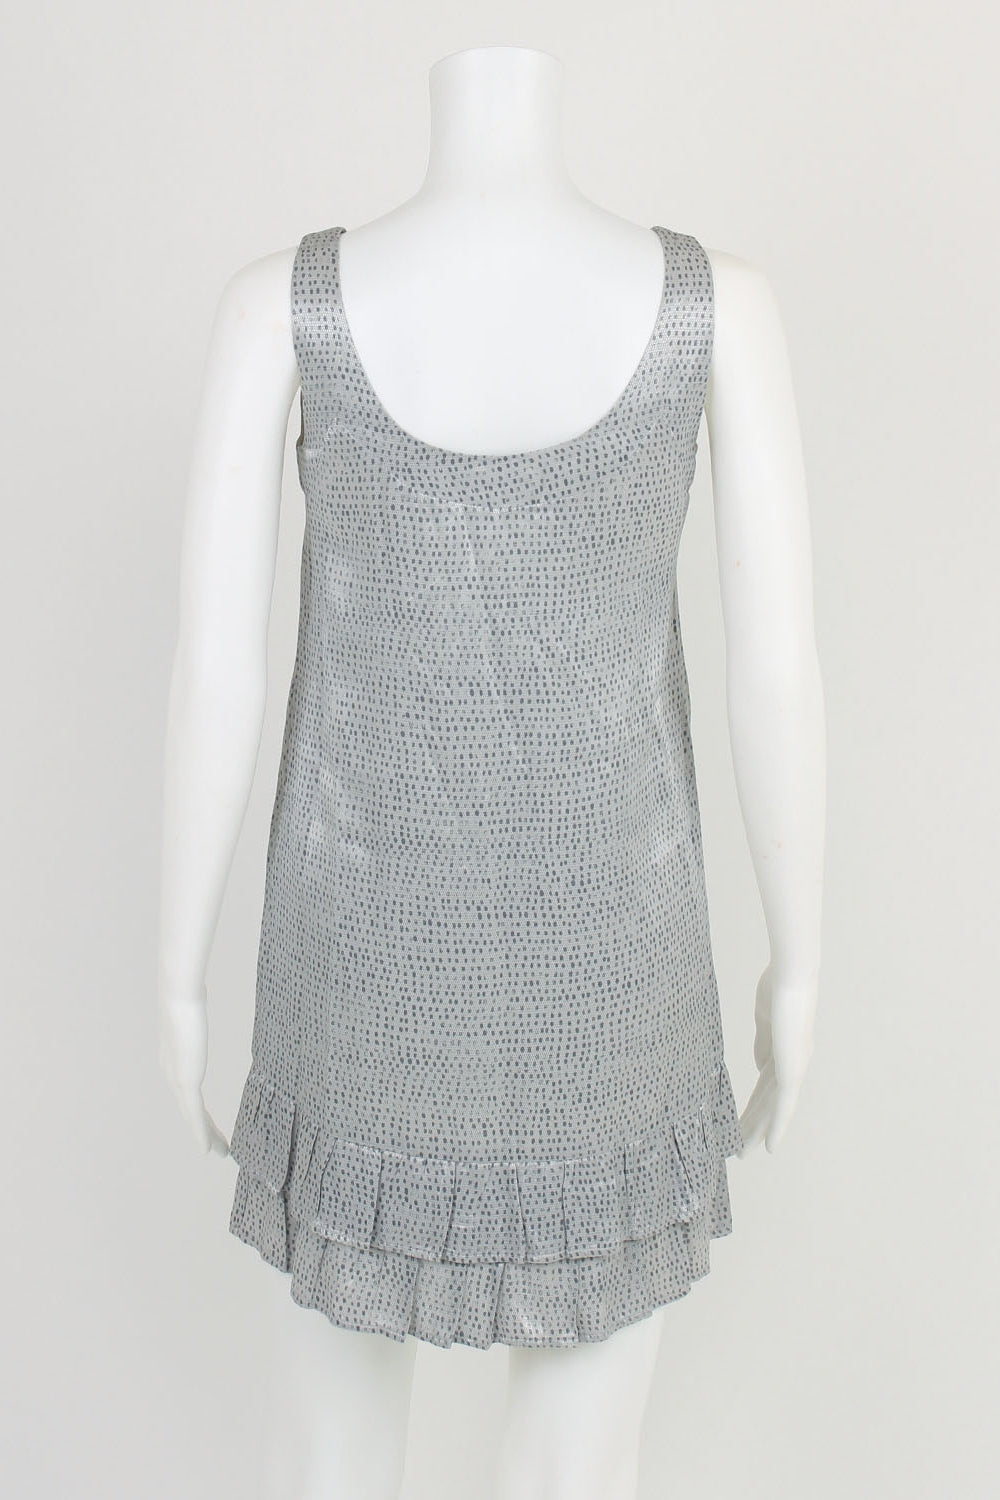 Bec & Bridge Silver Dress 6